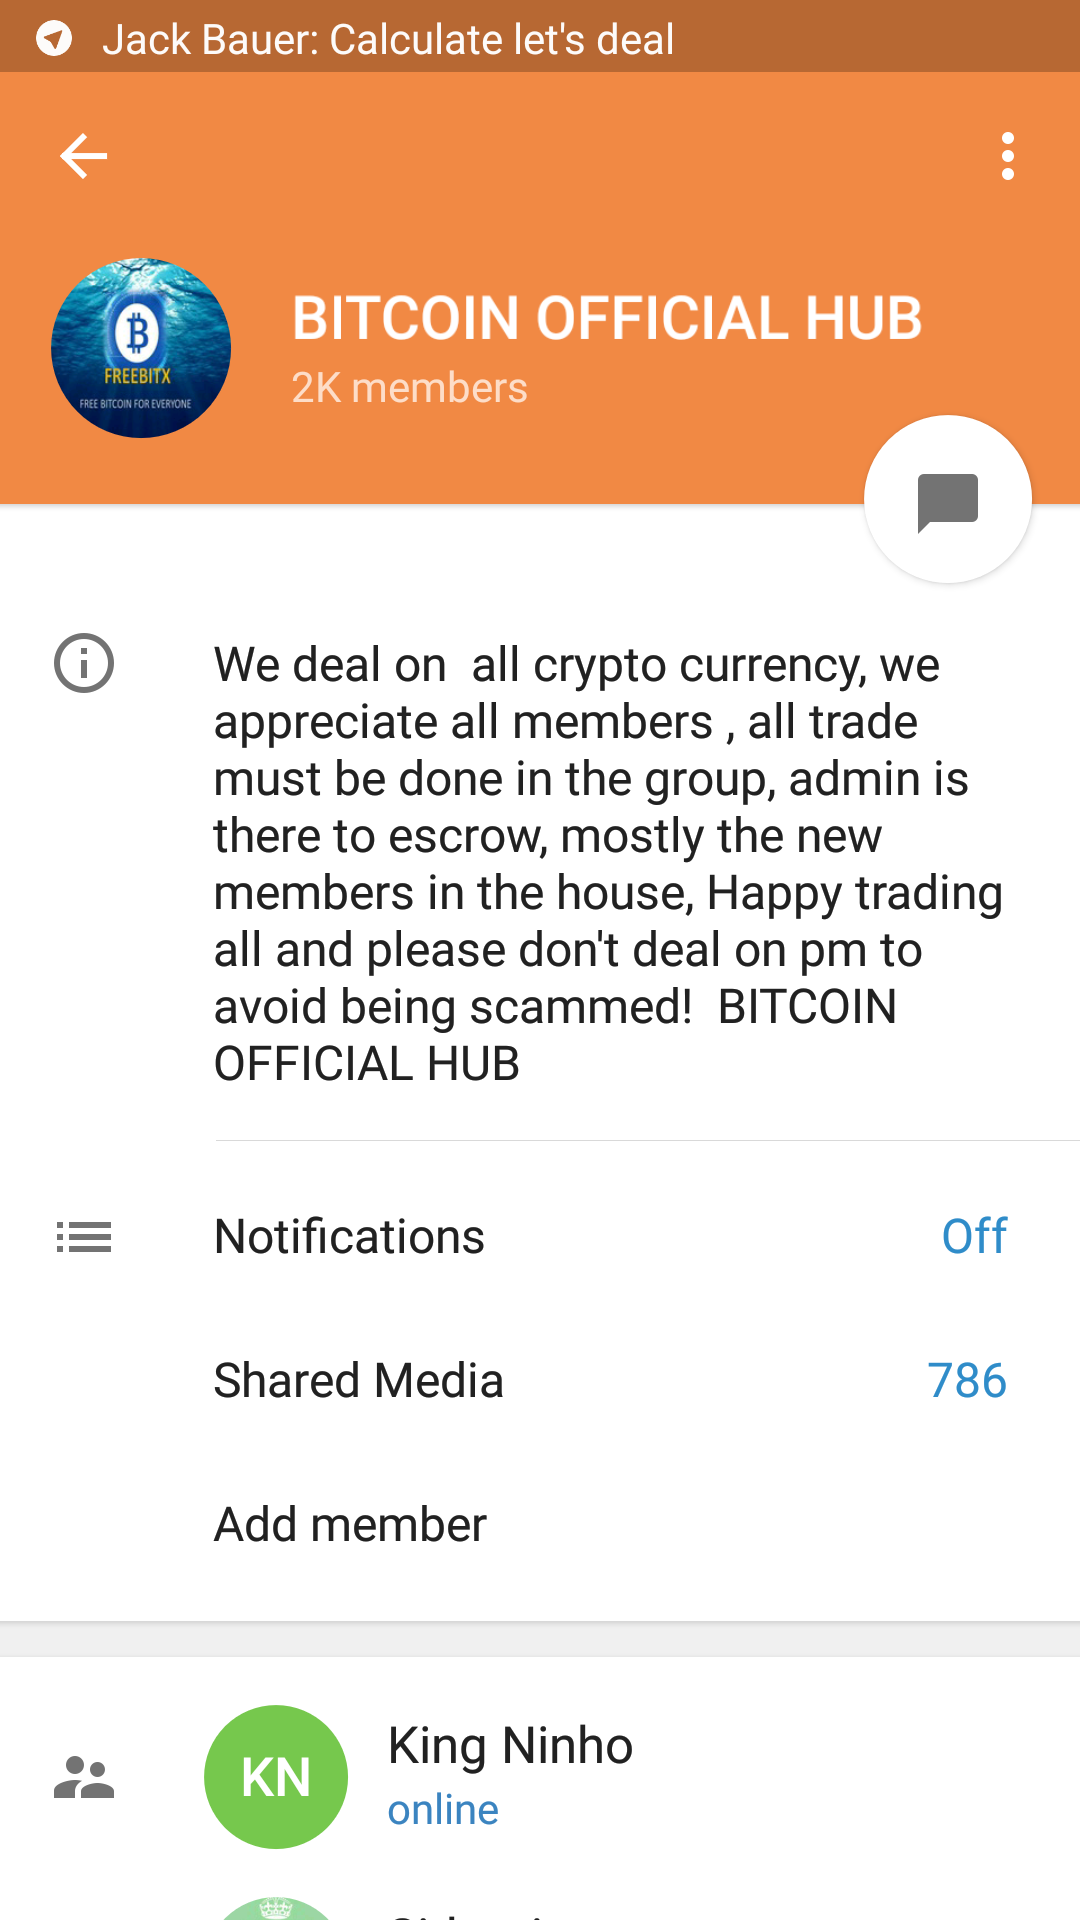 Bitcoin-Investition per Telegramm)